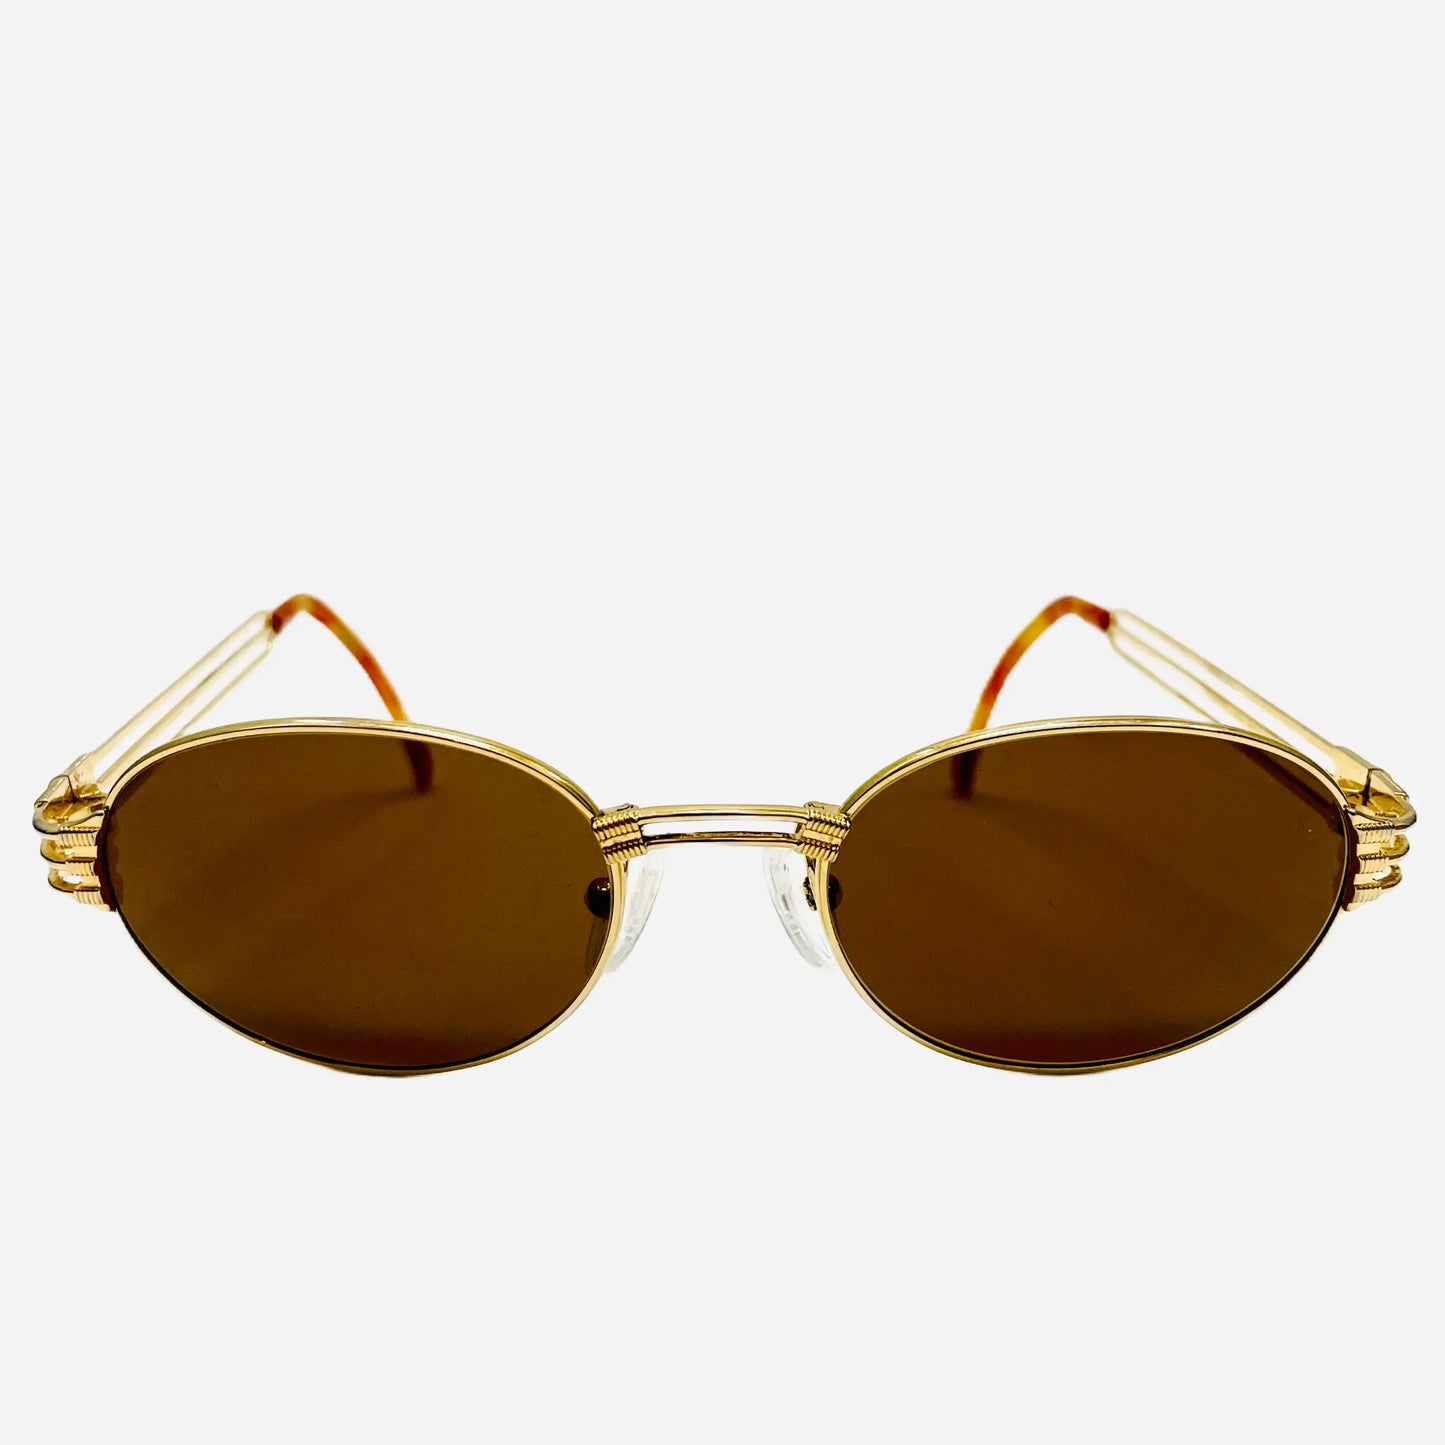 Vintage-Jean-Paul-Gaultier-Sonnenbrille-Sunglasses-57-5107-the-seekers-Front